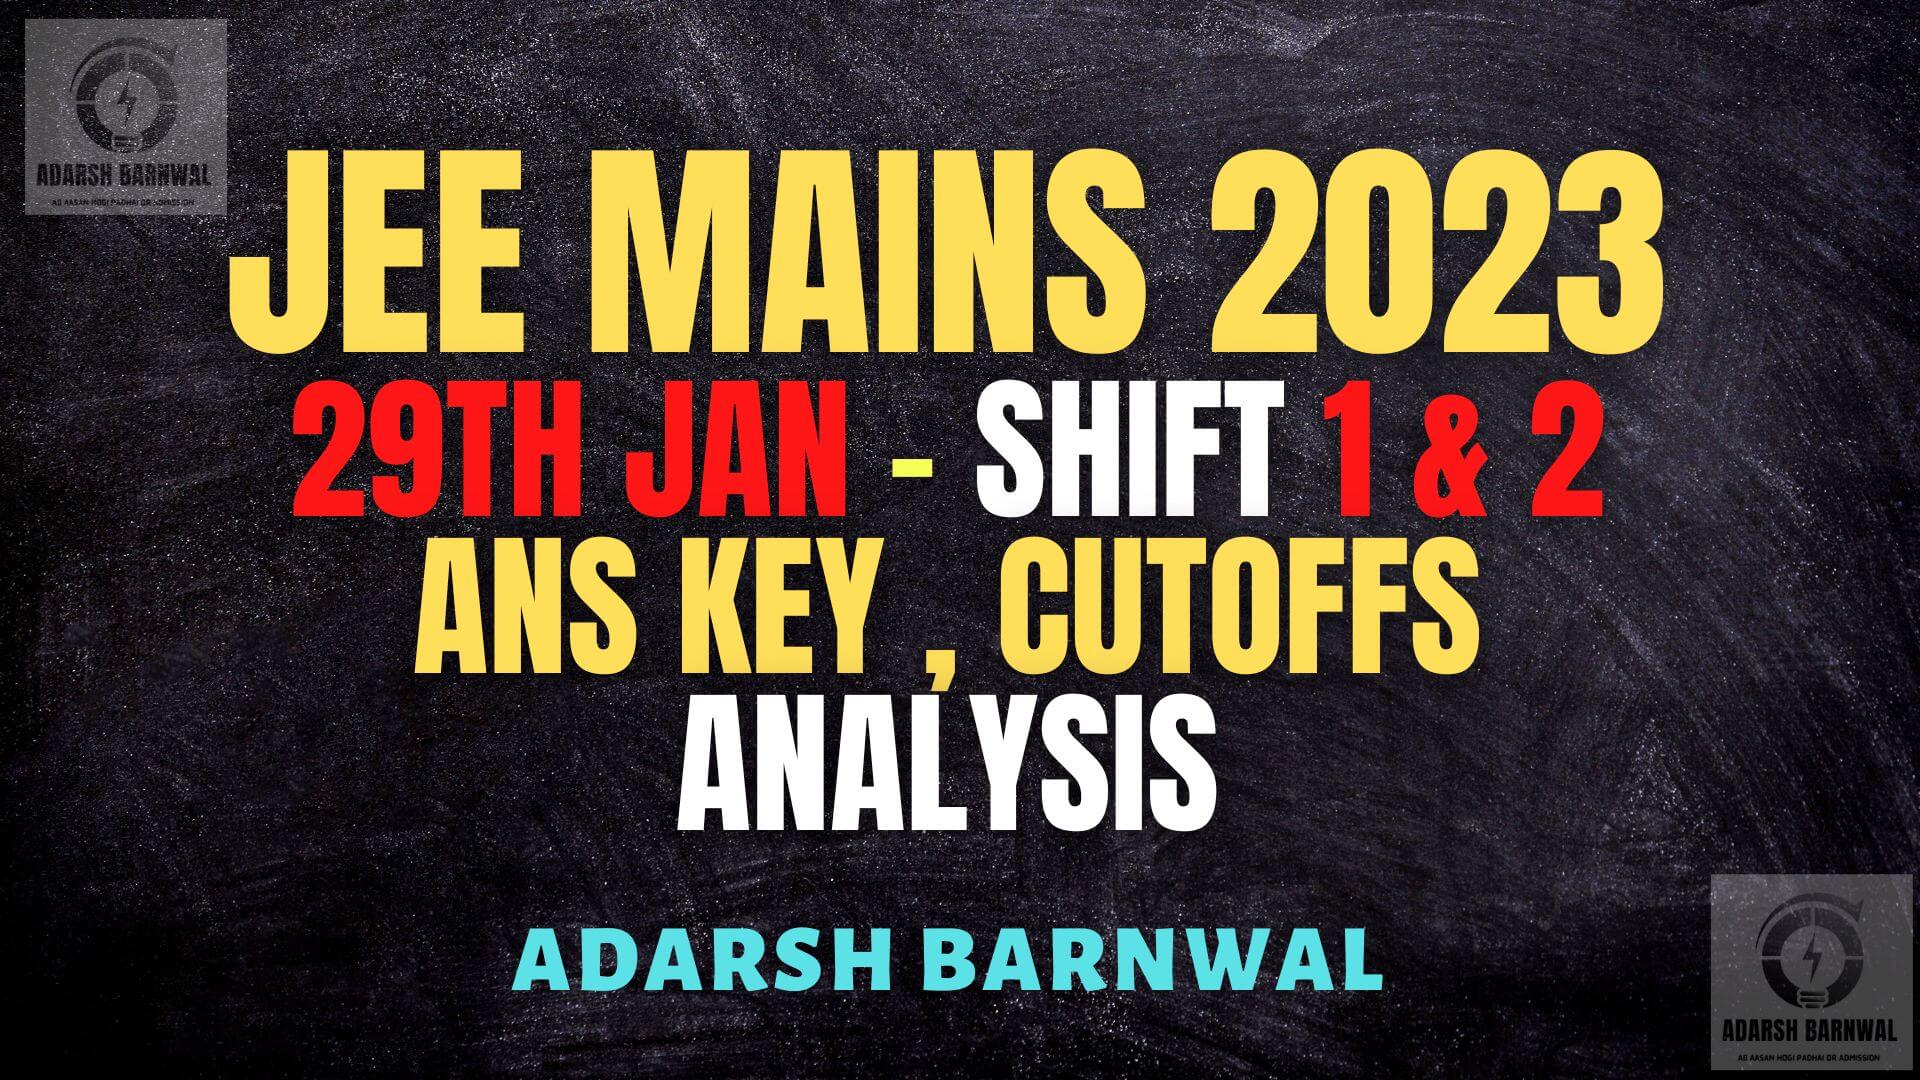 Jee Mains 2023 January 29 shift 1 & Shift 2 analysis ,Answer key , Expected cutoffs BY ADARSH BARNWAL